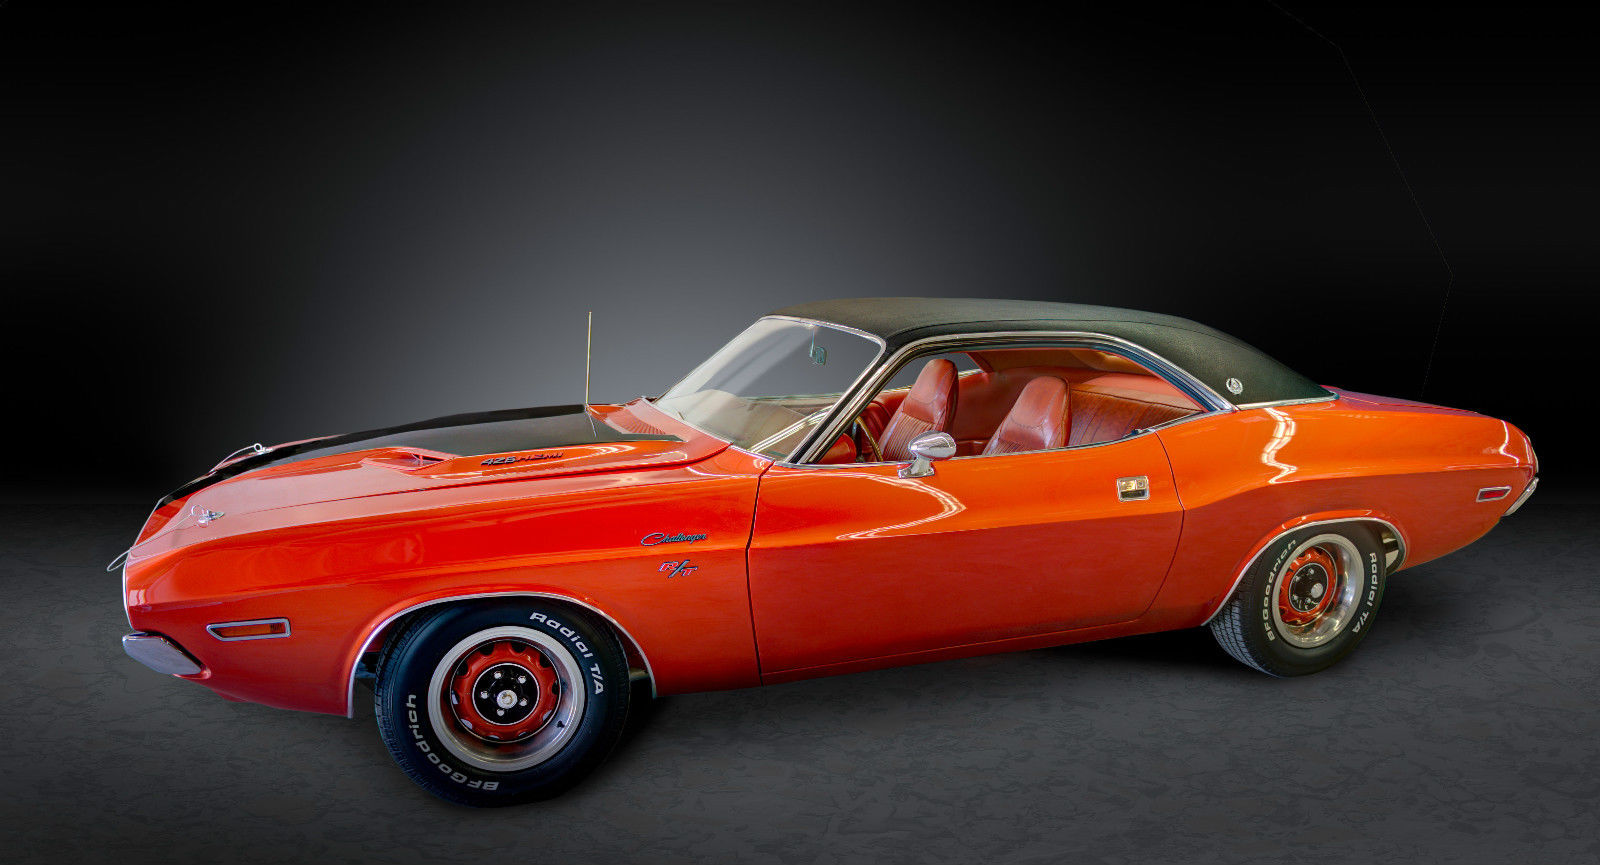 1970 Dodge Challenger RT 2 DR HT Spec Edition 426 Hemi Burnt Orange2